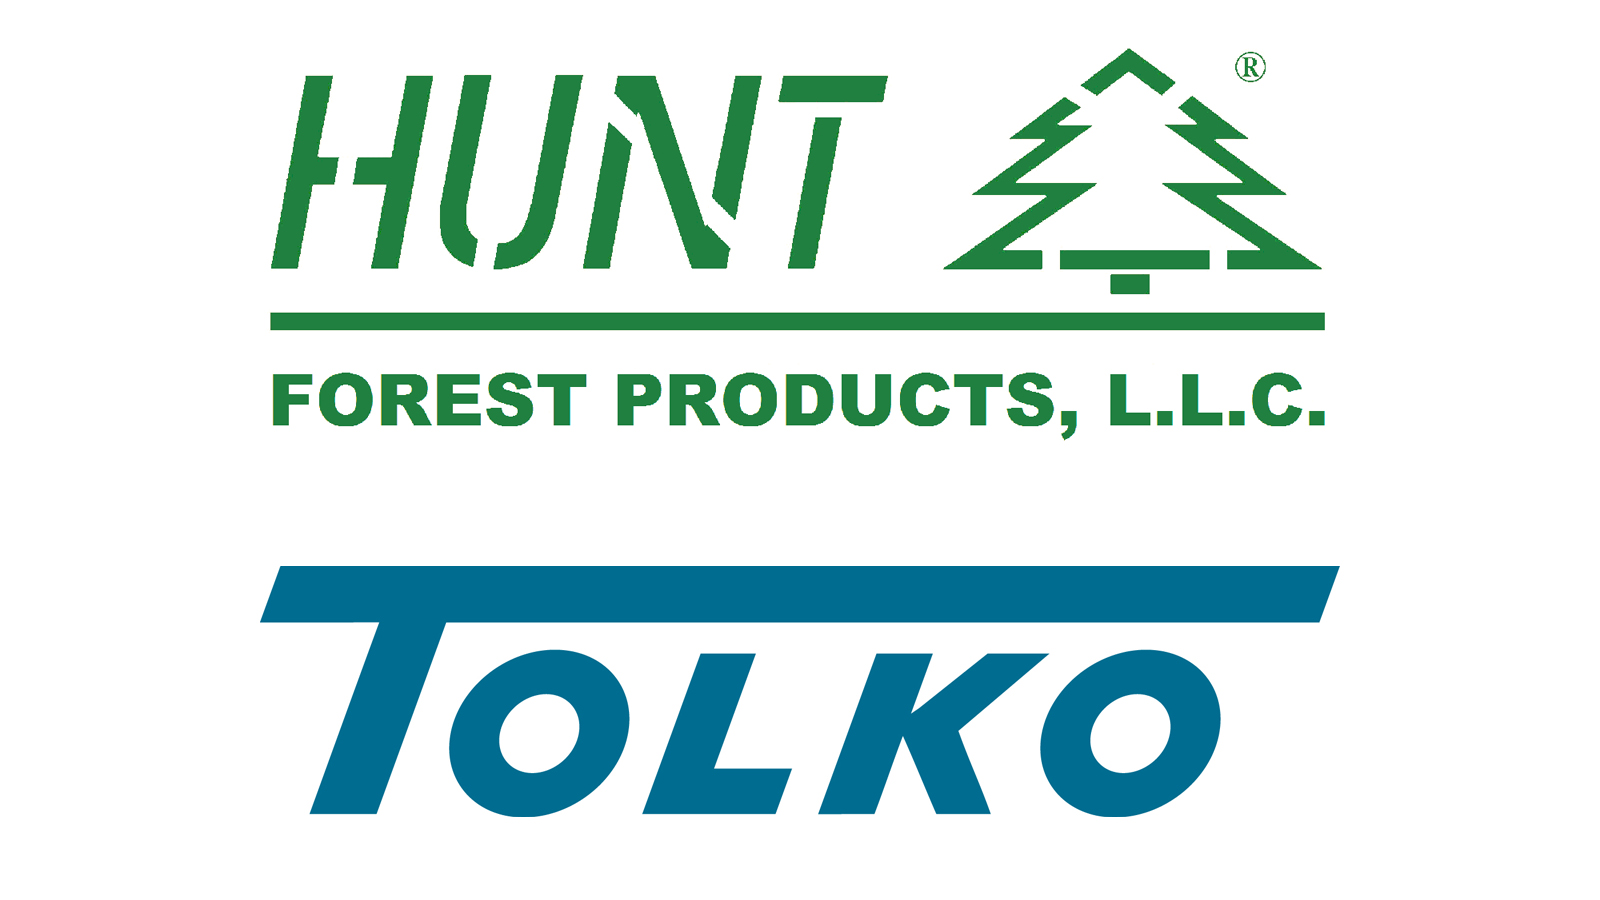 Hunt and Tolko logos